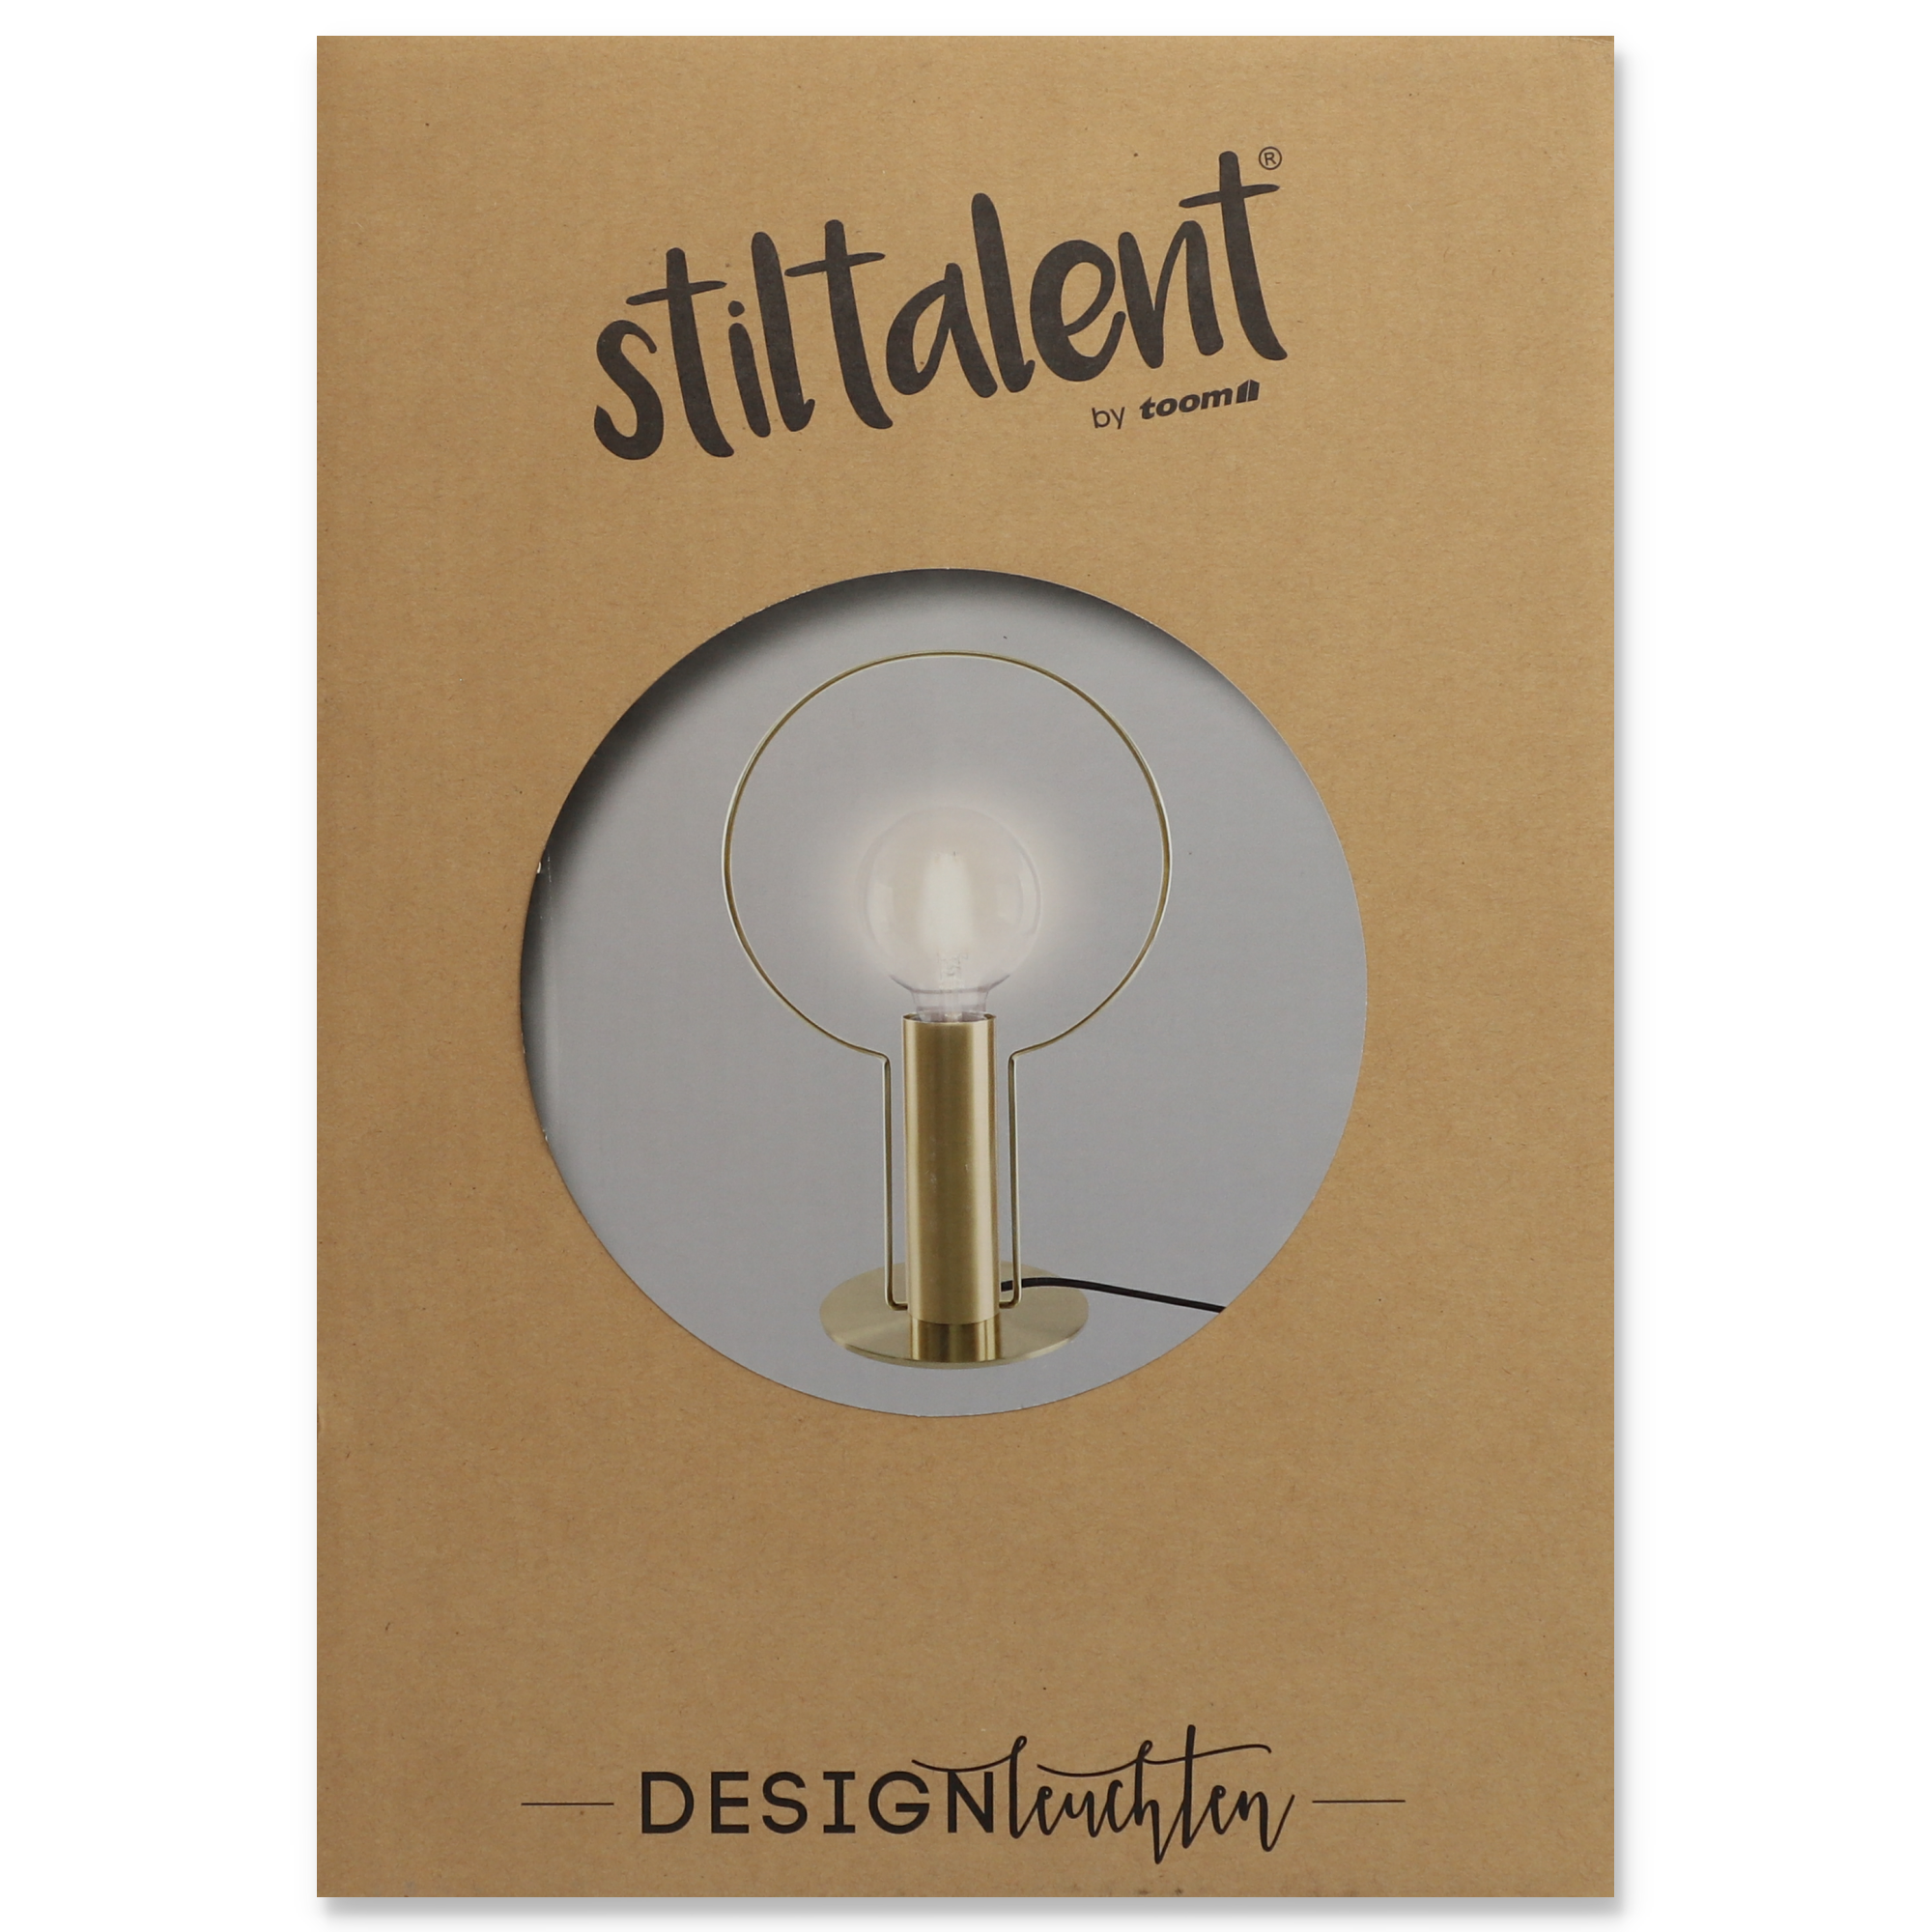 Stiltalent by toom® Tischleuchte 'Golden Halo' gold Ø 22,5 cm + product picture